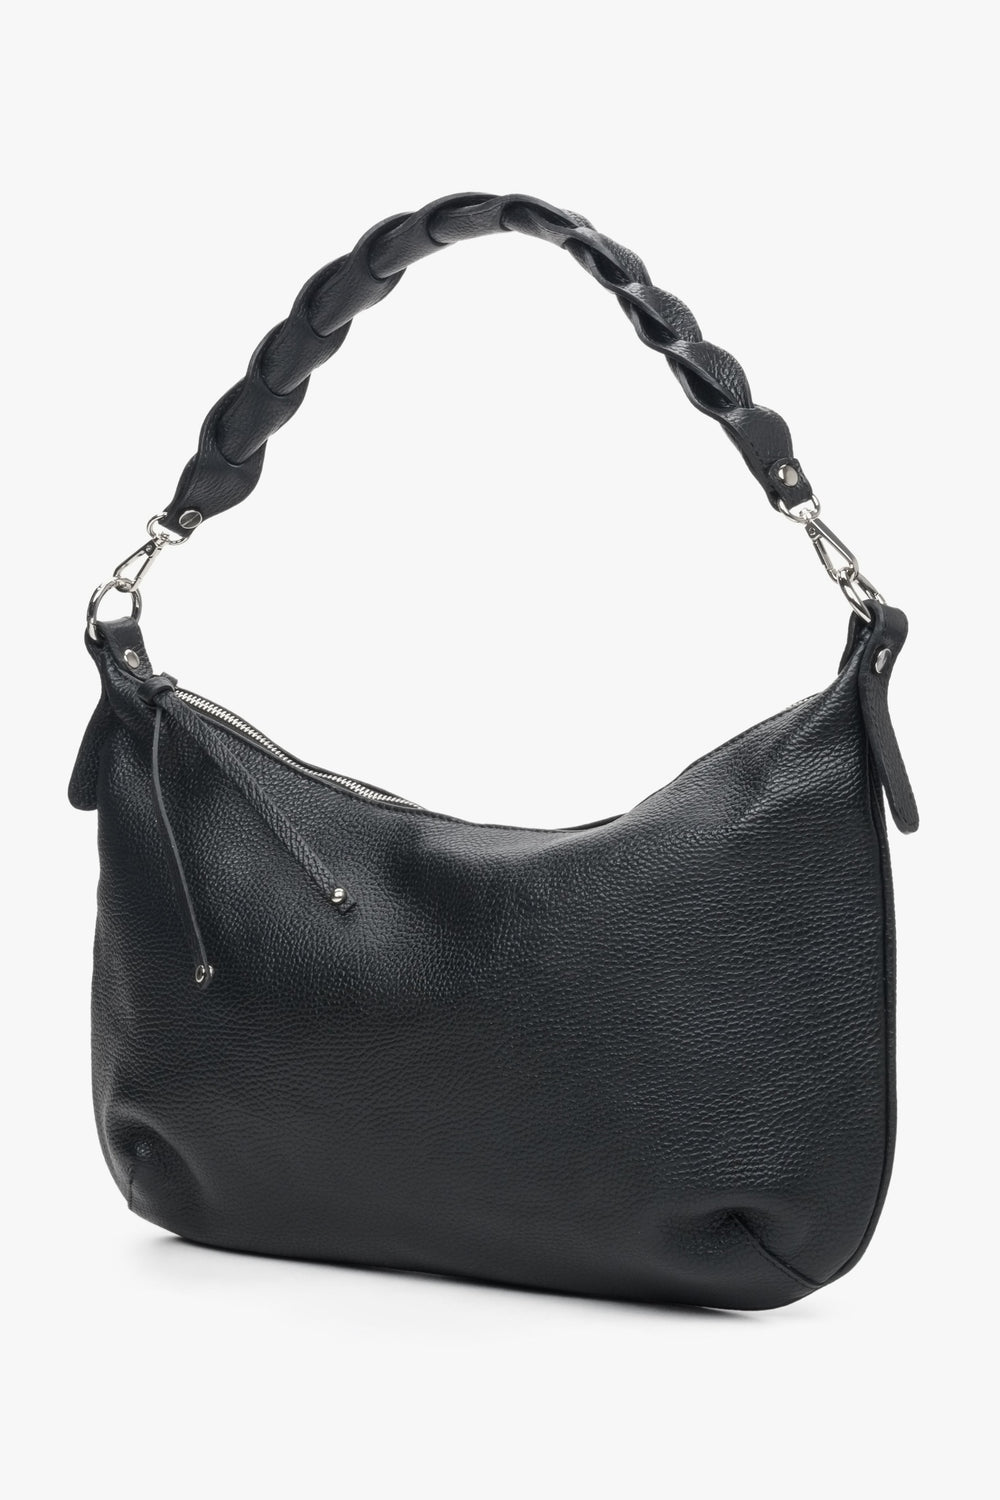 Small Black Women's Handbag Made in Italy Estro ER00113001